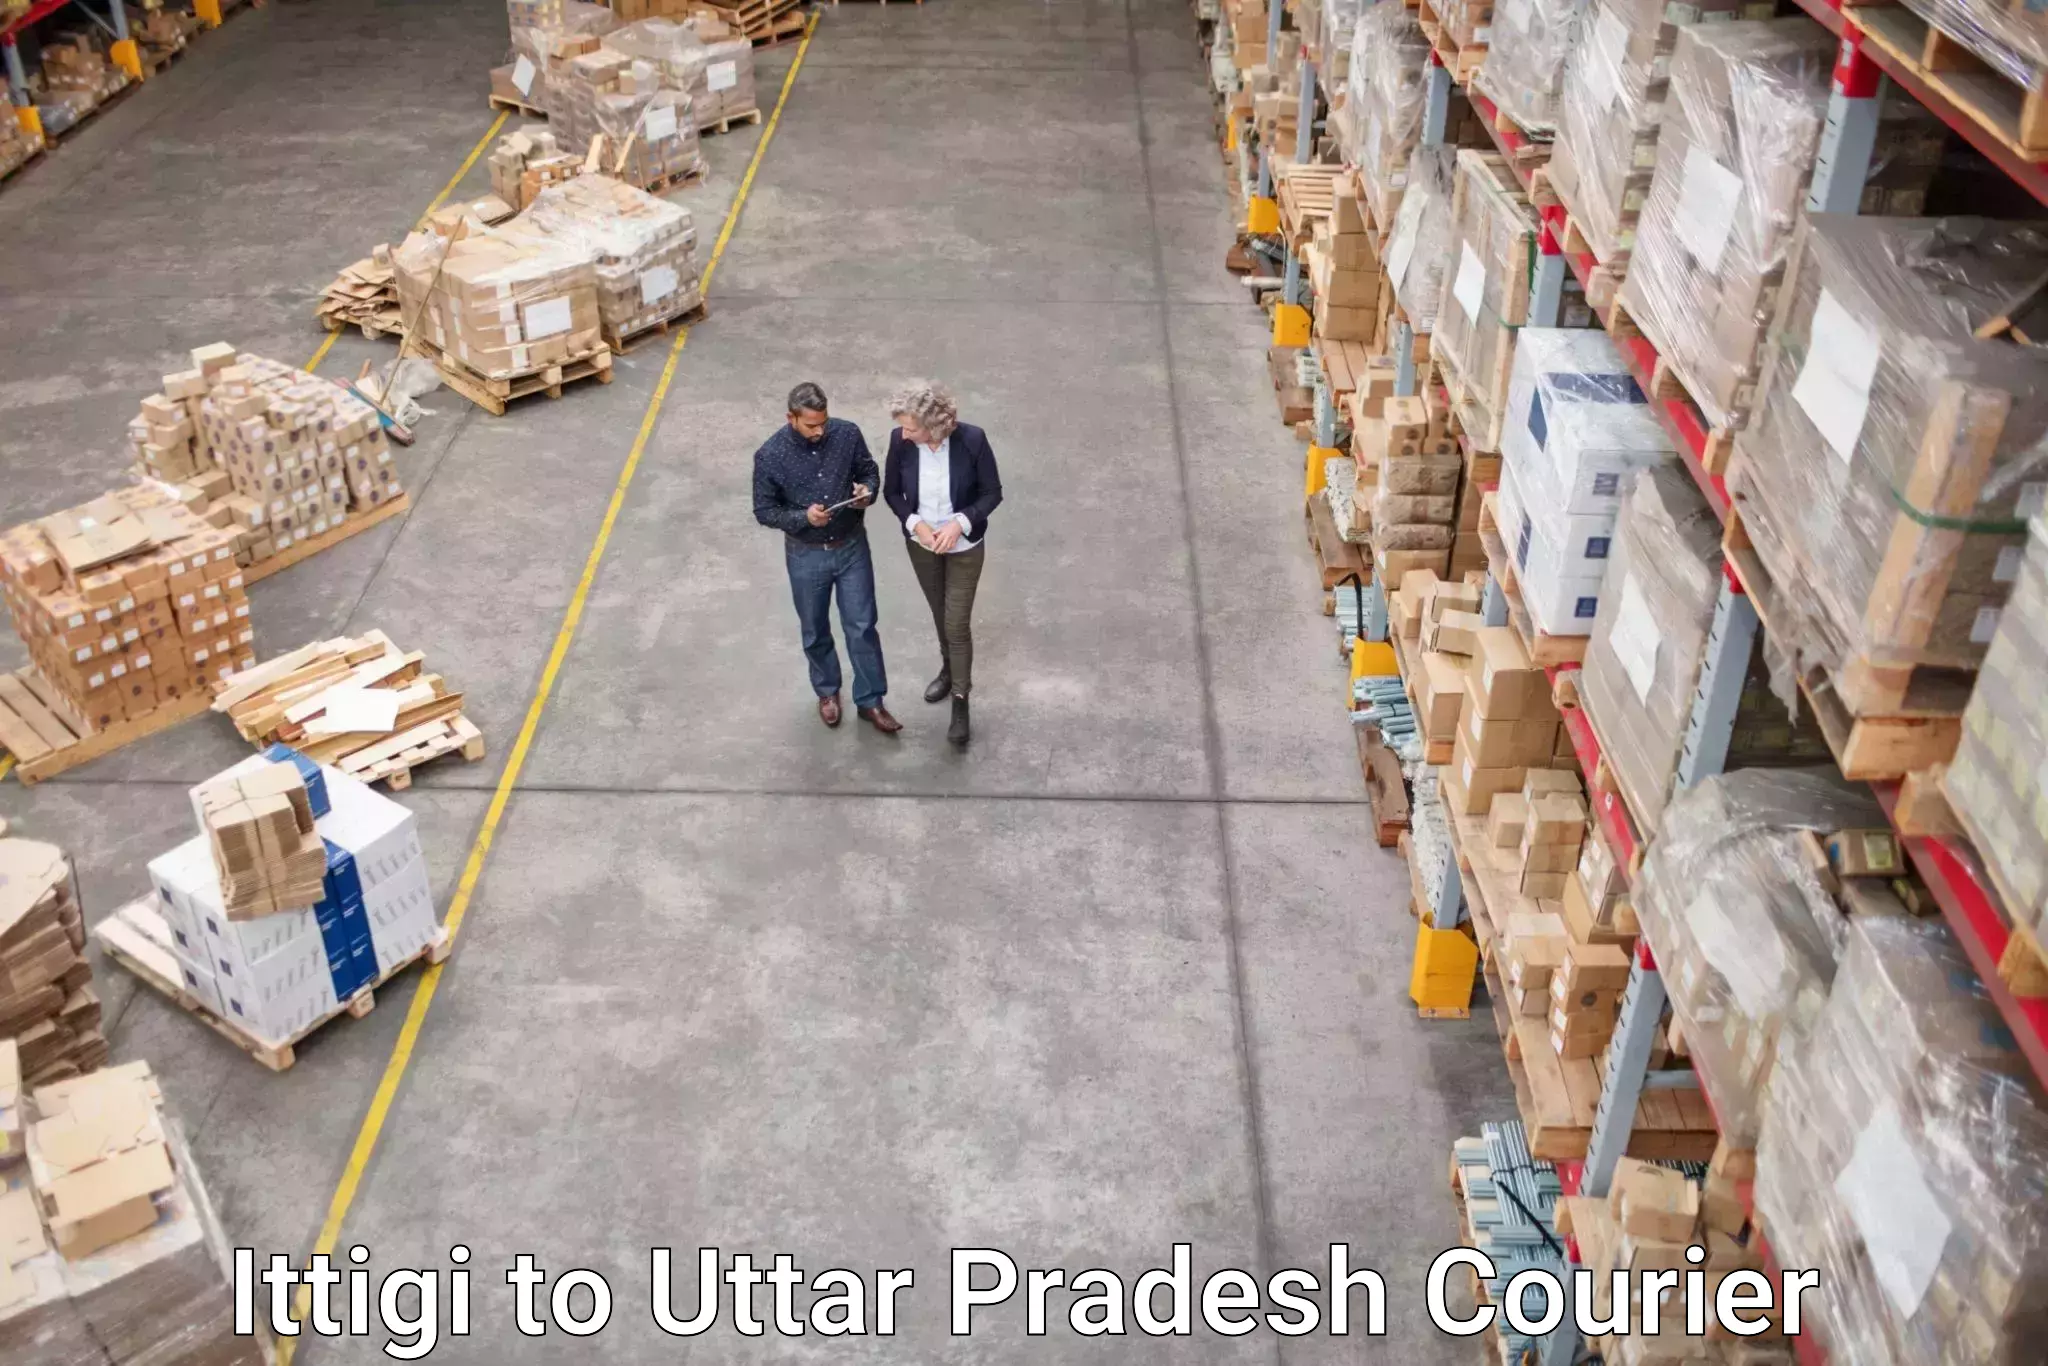 Premium delivery services Ittigi to Uttar Pradesh